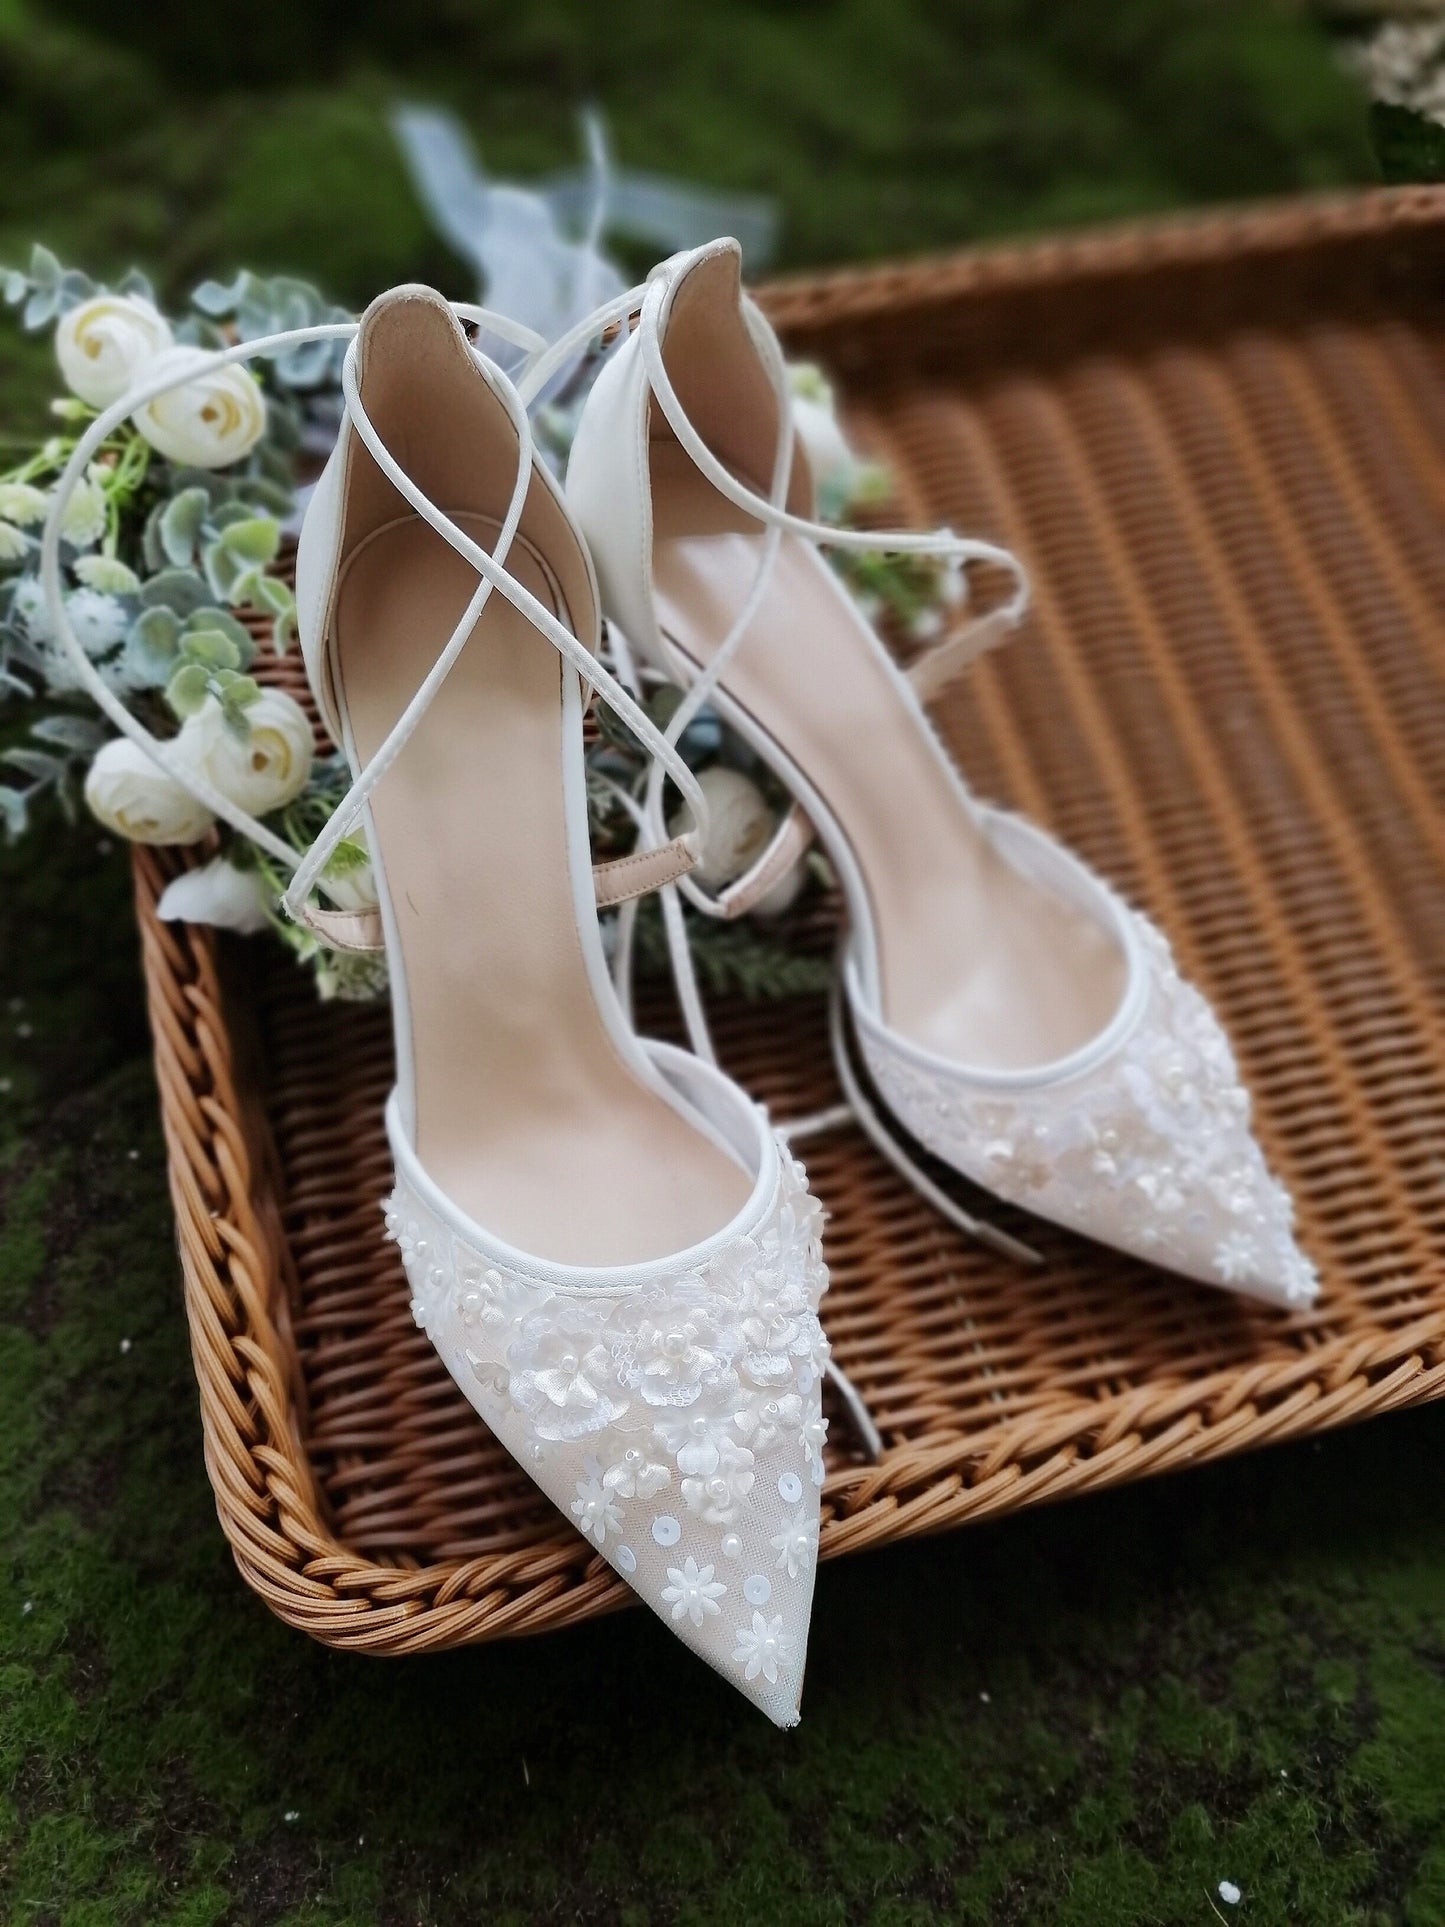 Handmade Girl White Bandage Lady's High Heels Wedding Shoes